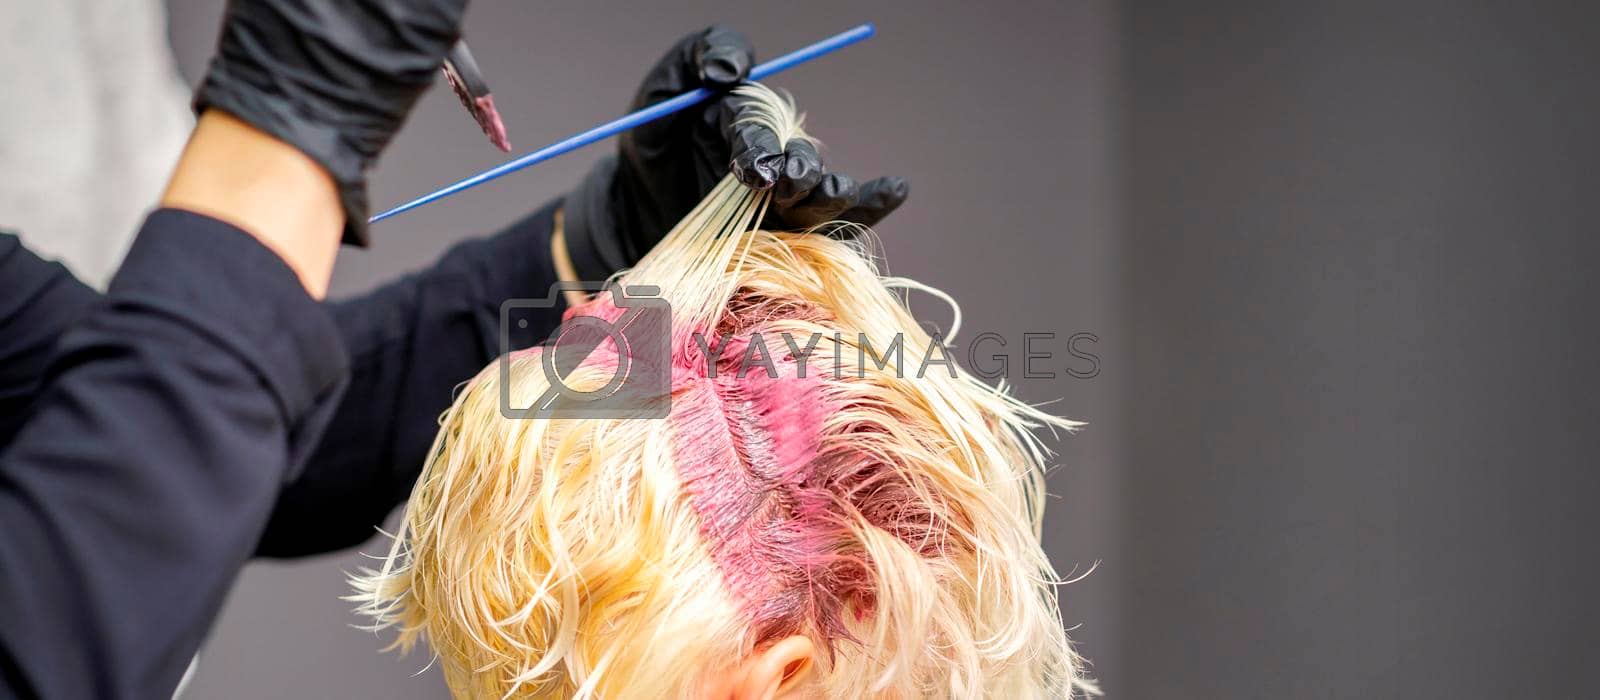 Royalty free image of Hairdresser's hands applying pink dye by okskukuruza